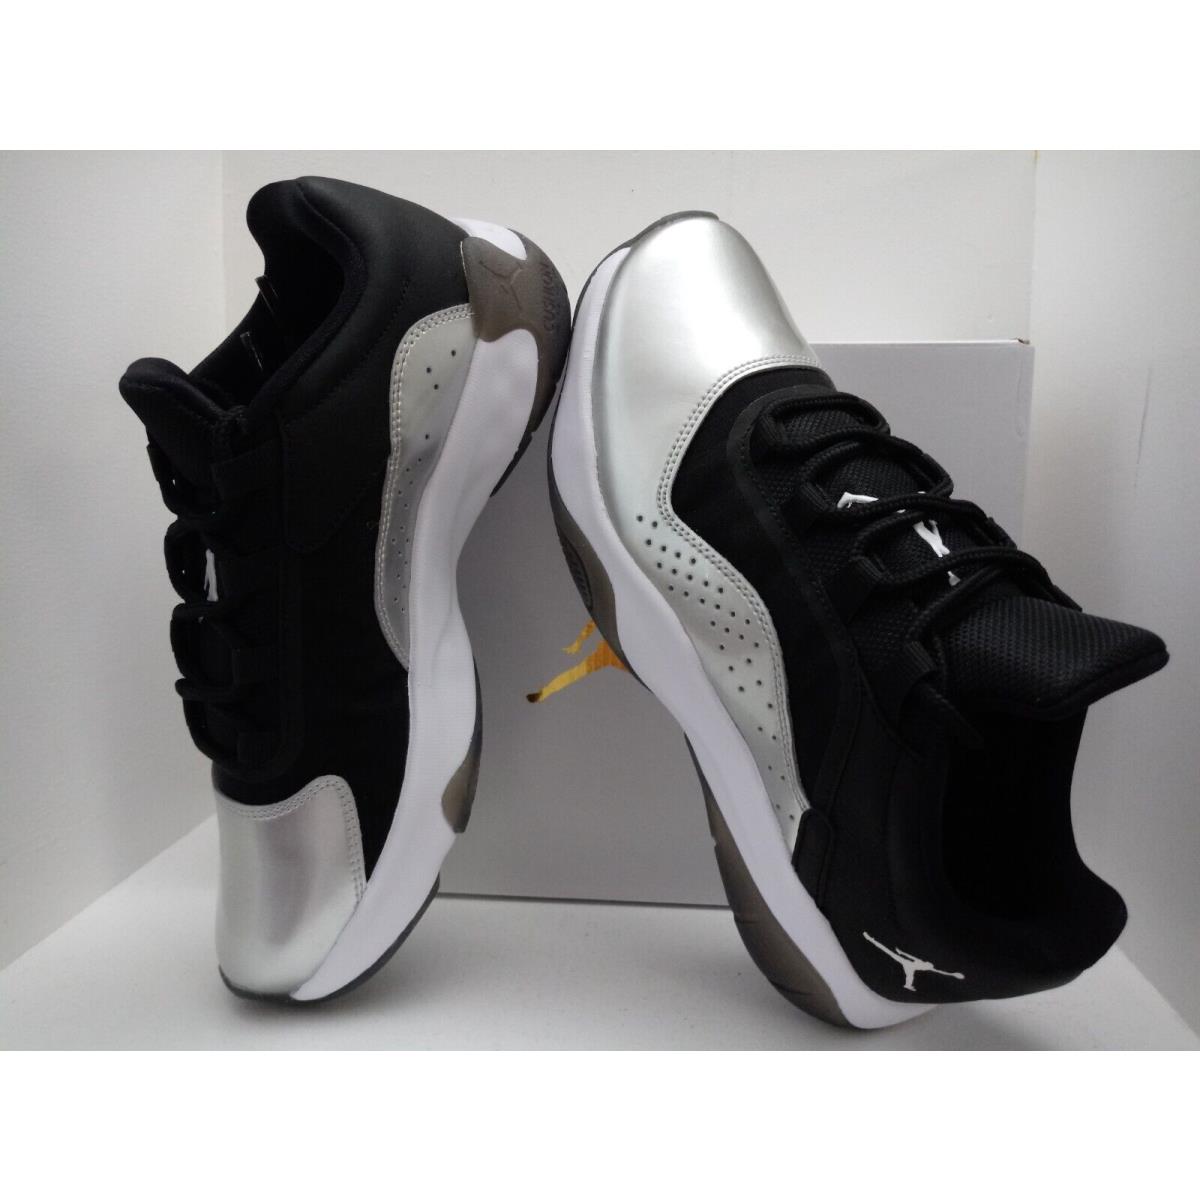 Nike shoes  - BLACK/METALLIC SILVER-WHITE 20